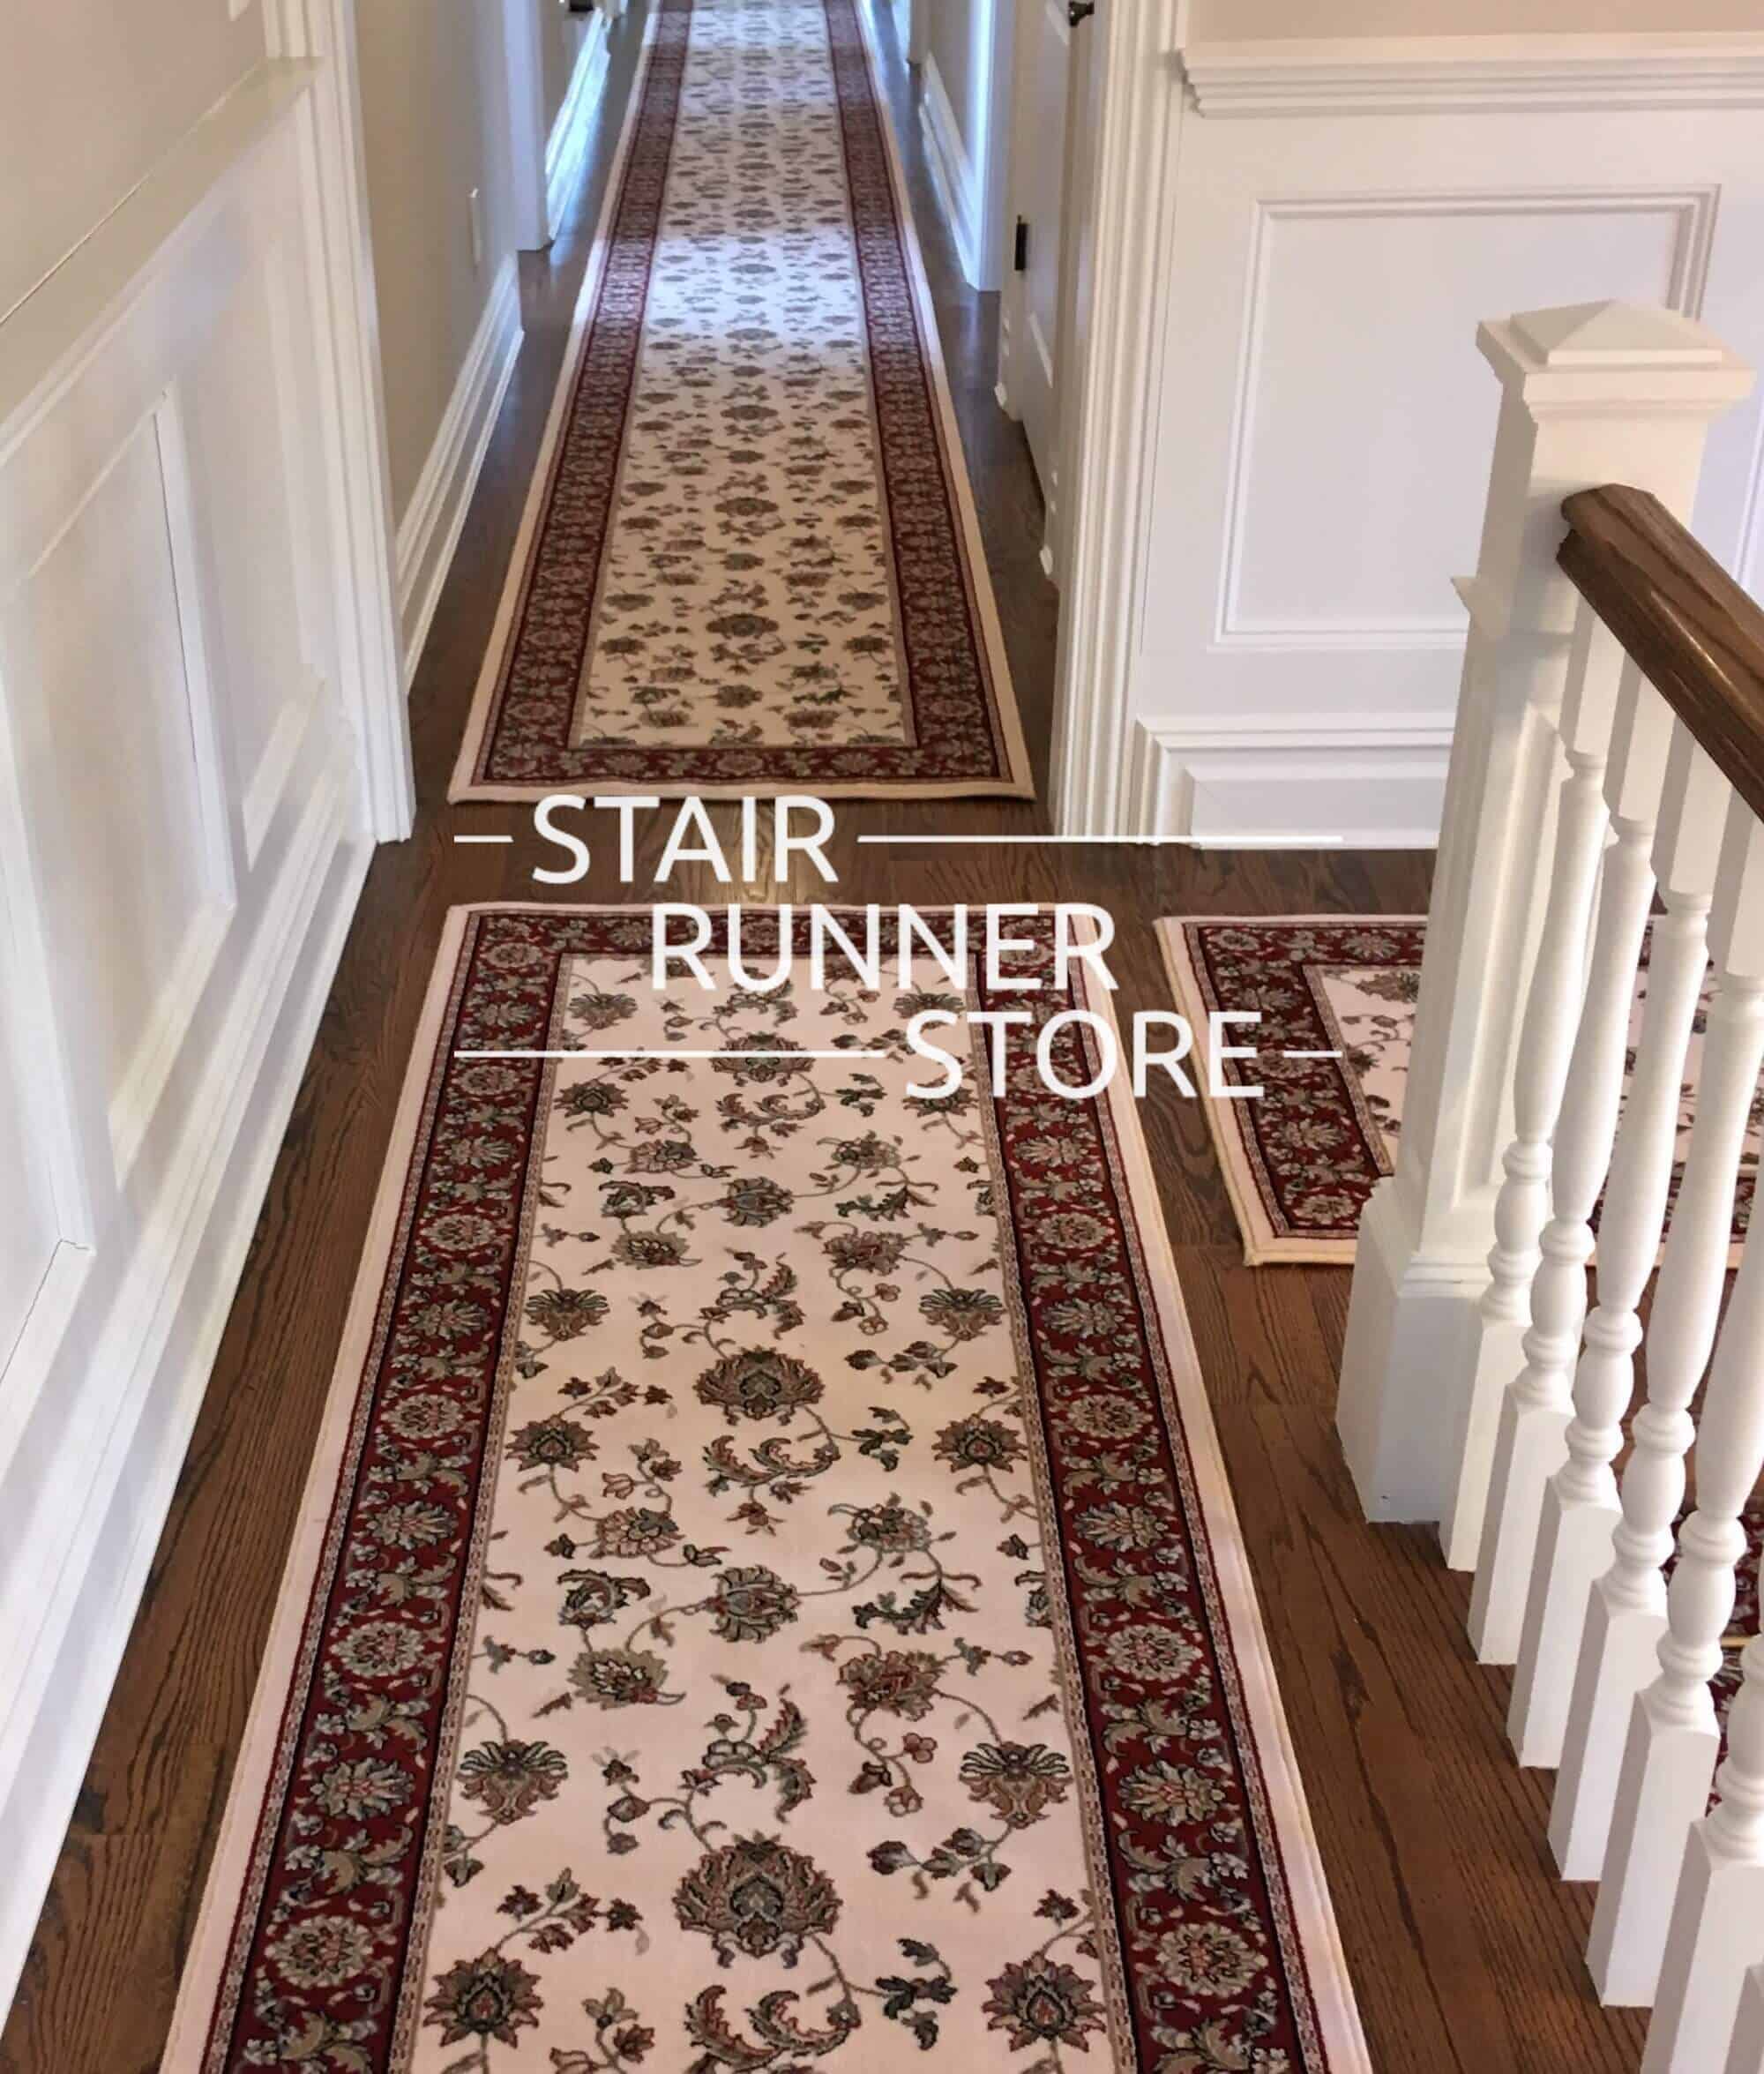 Home - Stair Runner Store